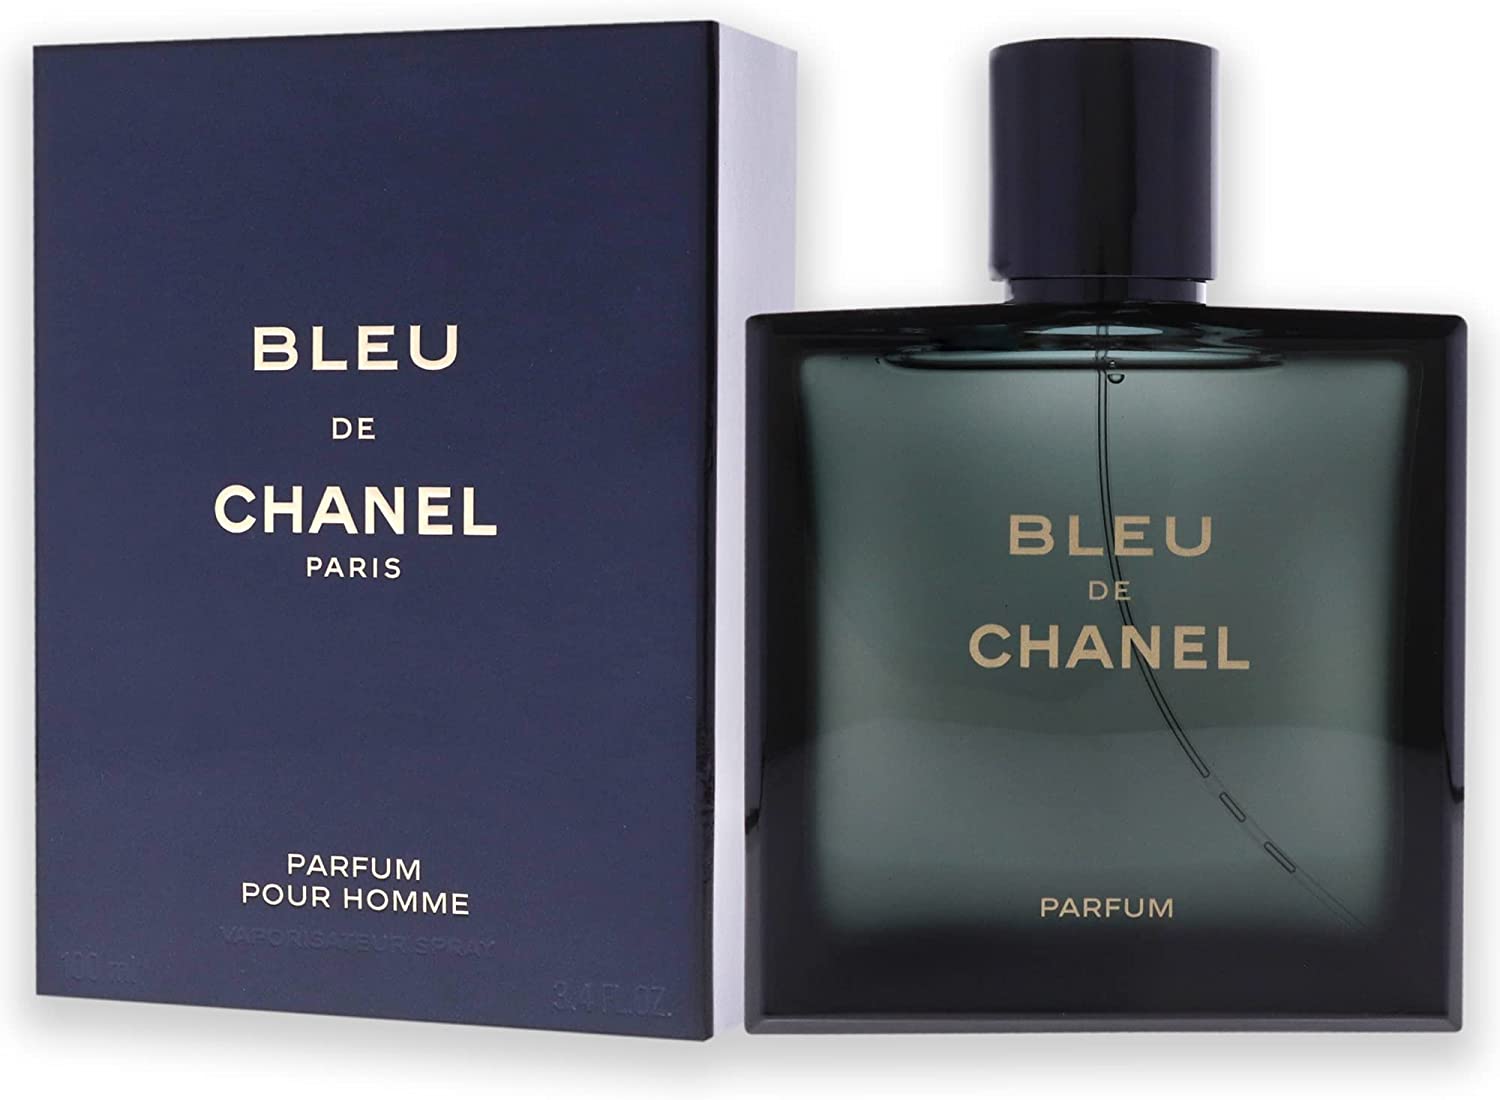 Chanel bleu parfum : r/DesiFragranceAddicts